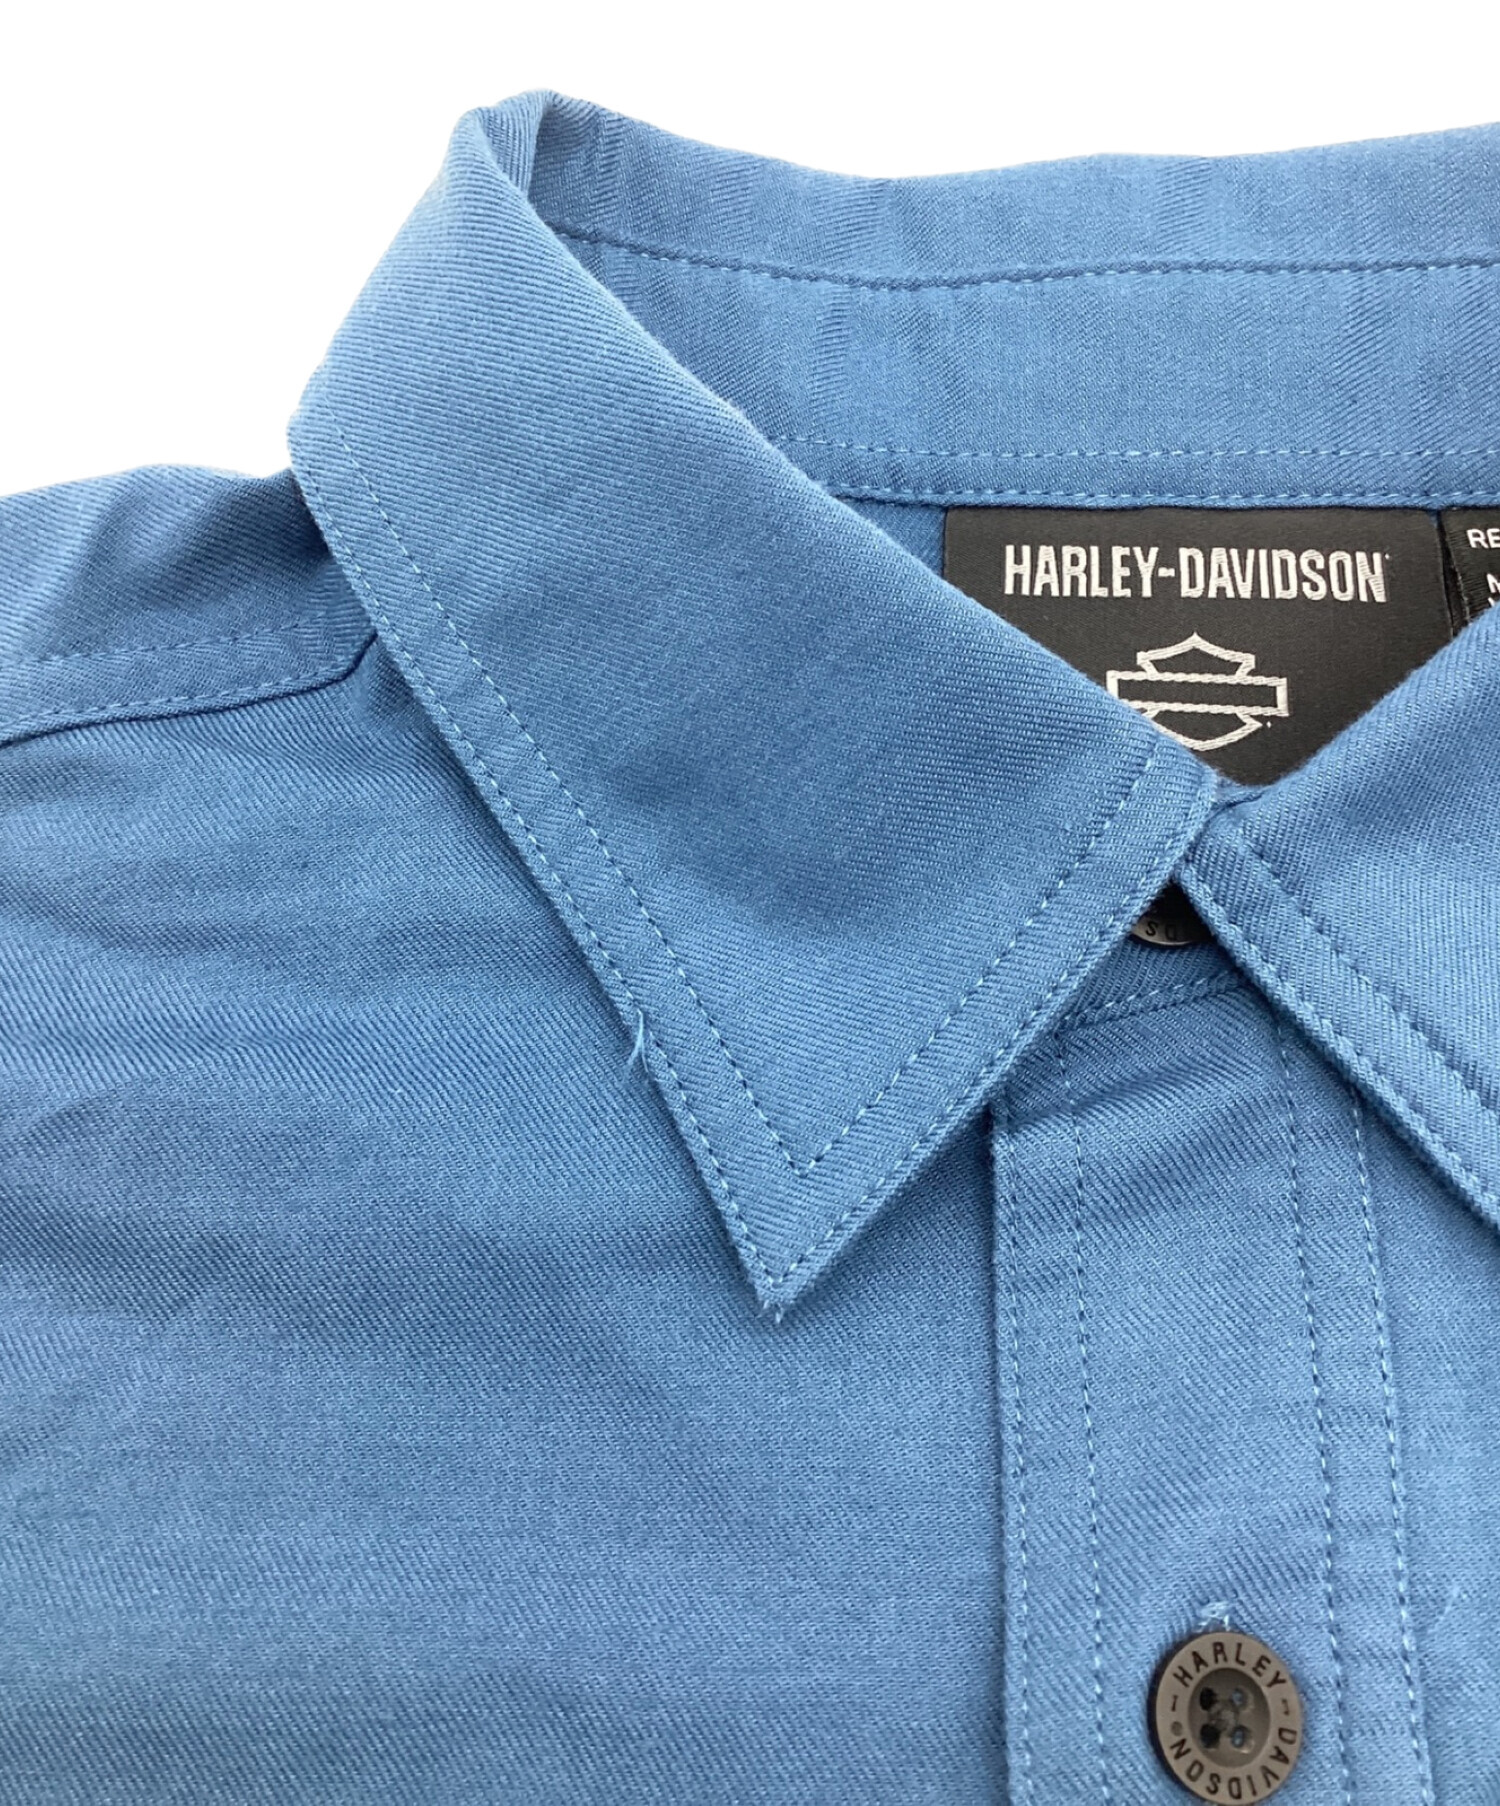 HARLEY-DAVIDSON (ハーレーダビッドソン) 刺繍半袖ワークシャツ ブルー サイズ:S